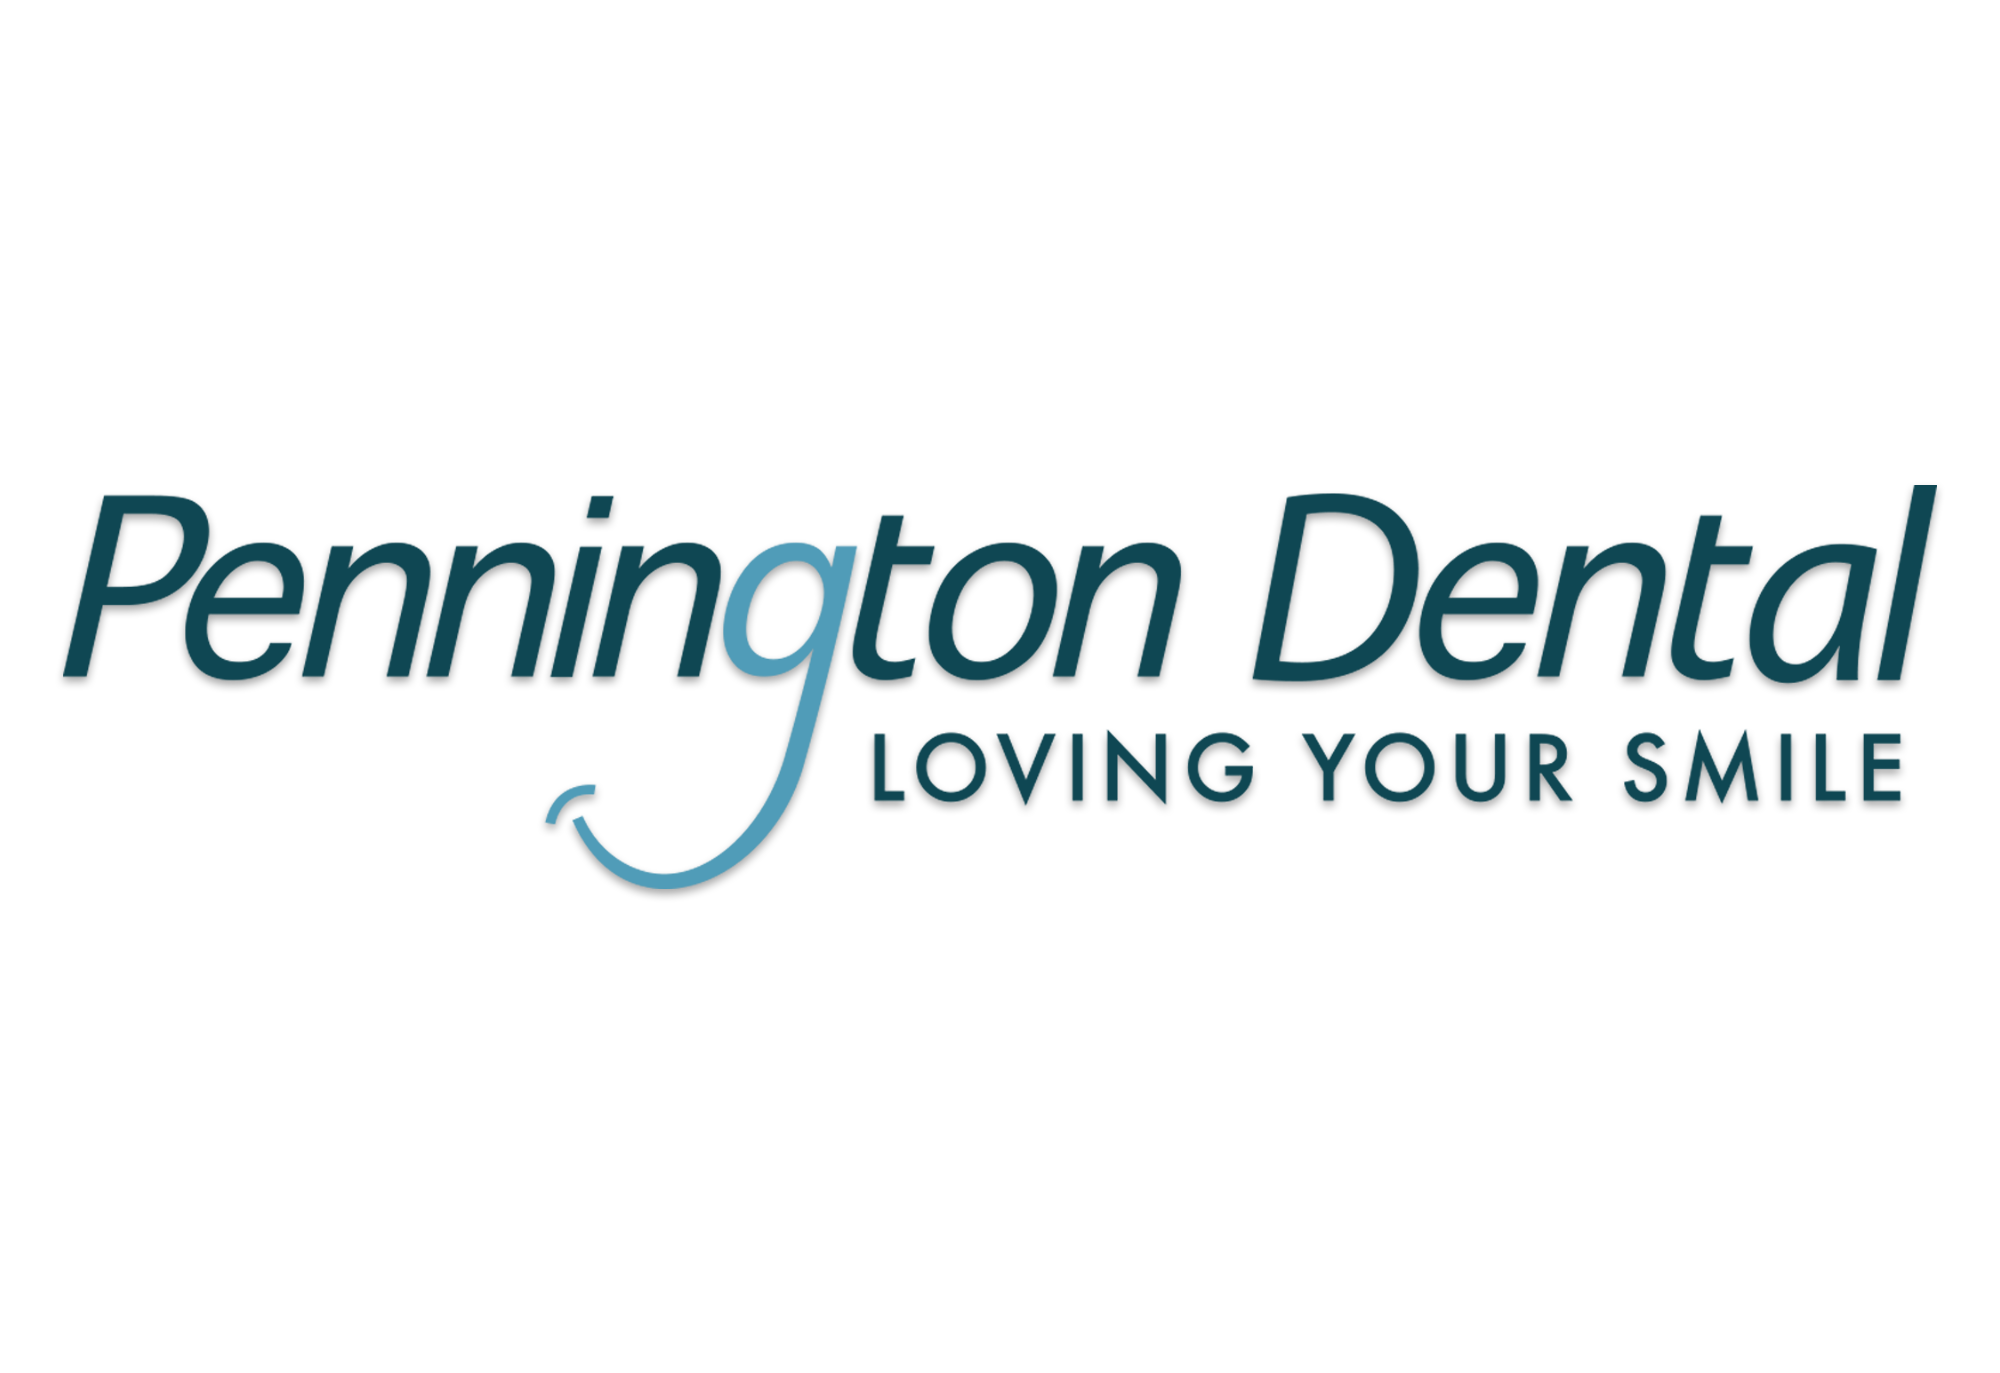 Pennington Logo